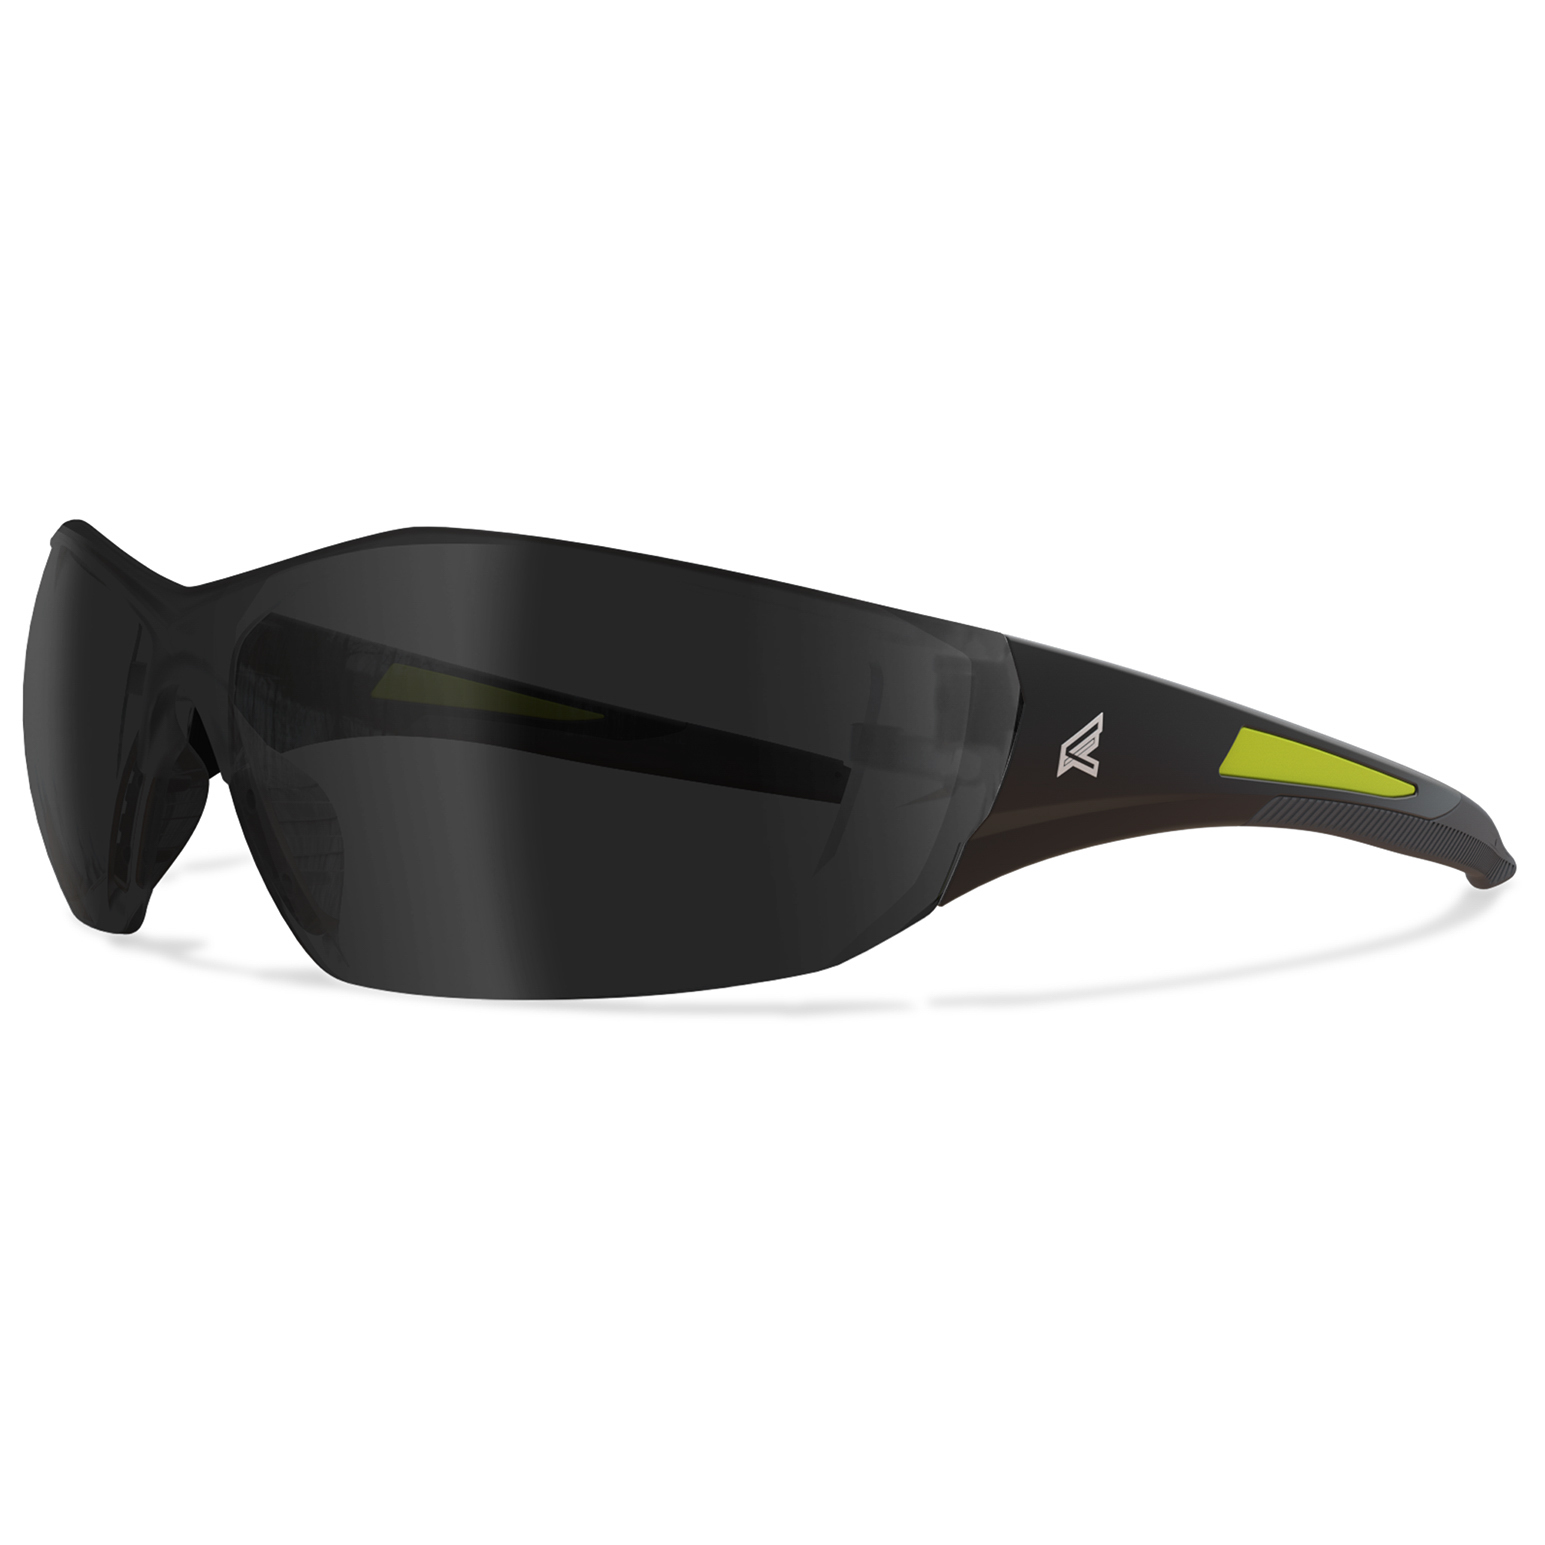 Edge SD116-G2 Delano G2 Safety Glasses - Black Temples - Smoke